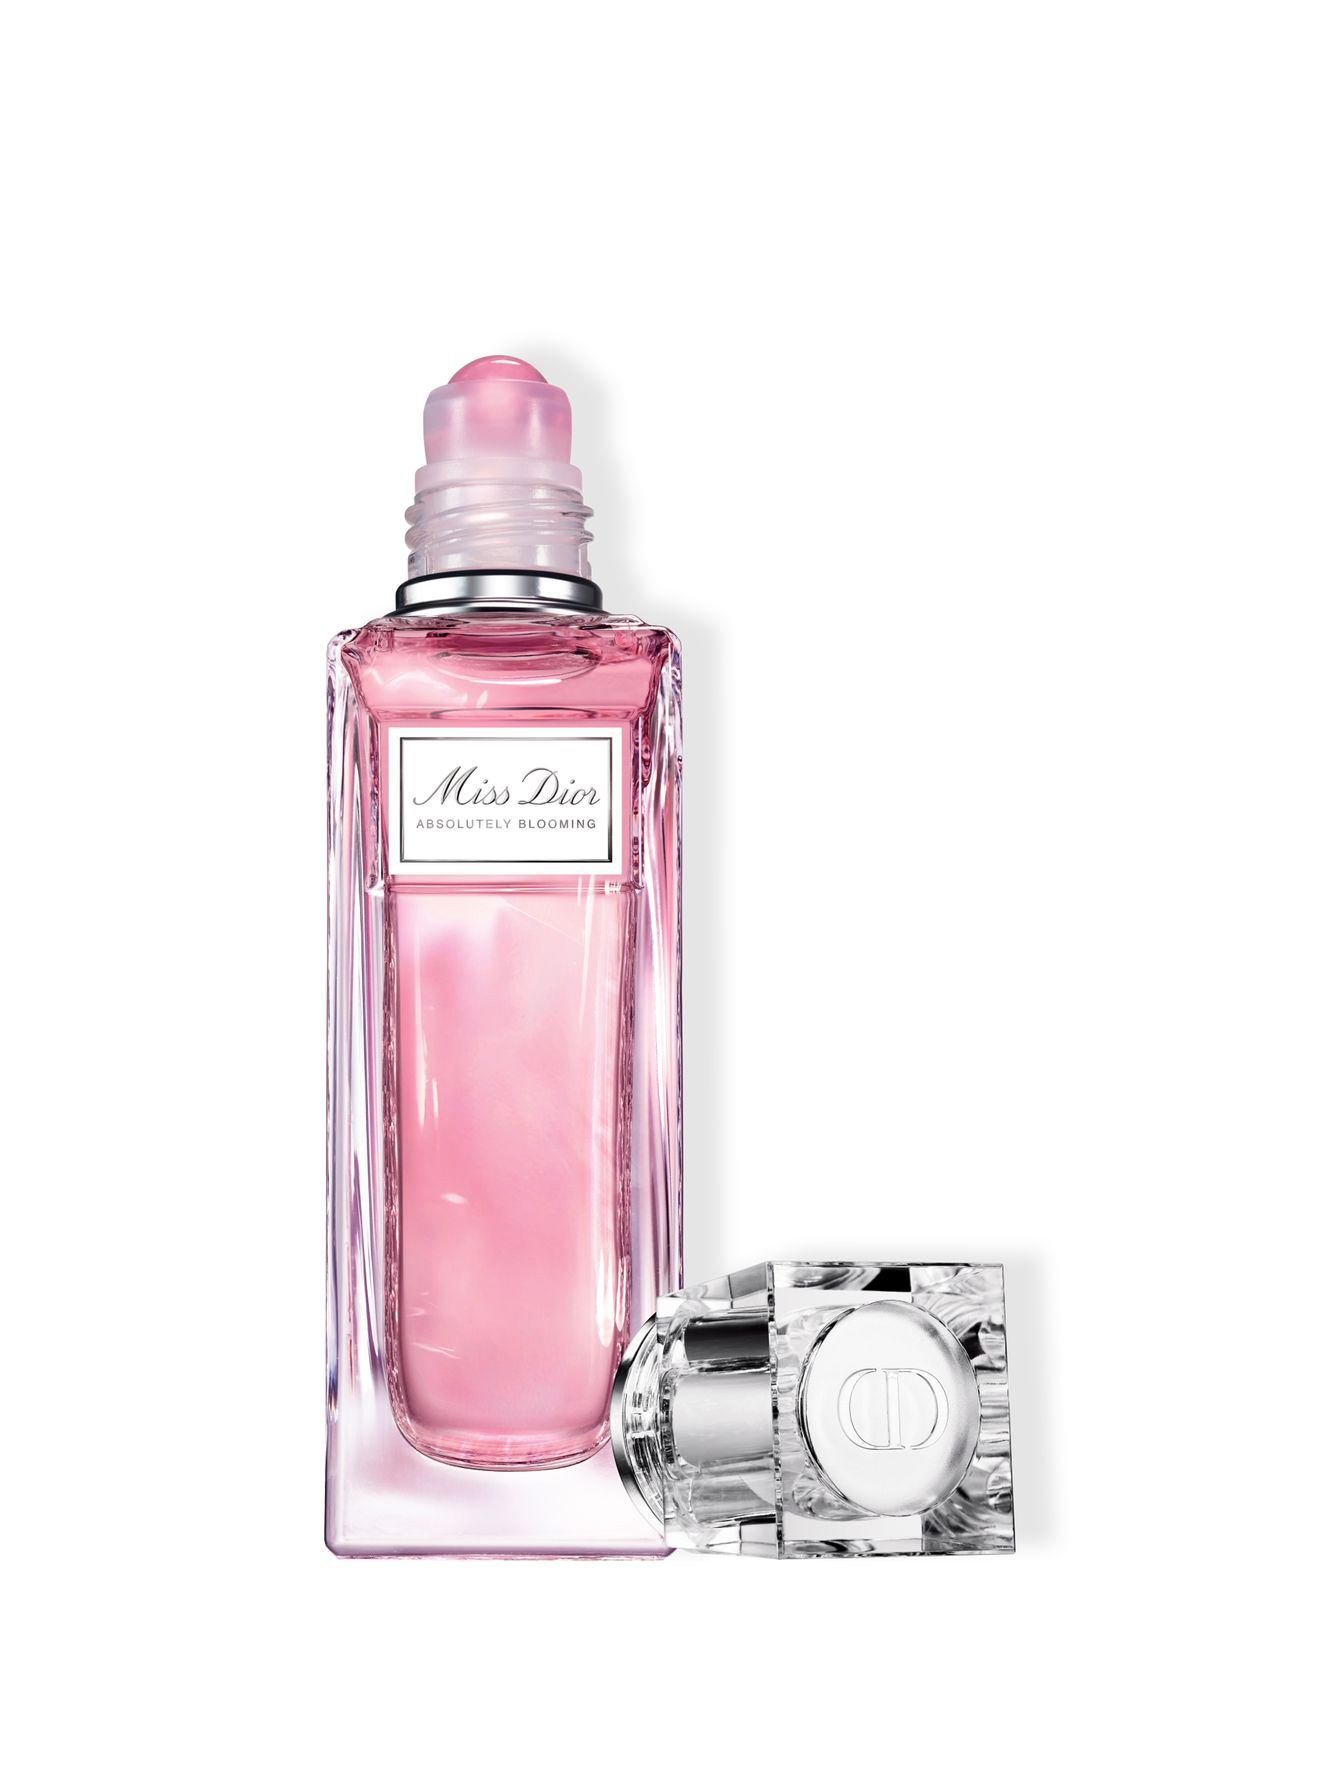 Miss Dior Absolutely Blooming Парфюмерная вода с роликовым аппликатором 20 мл - Обтравка1